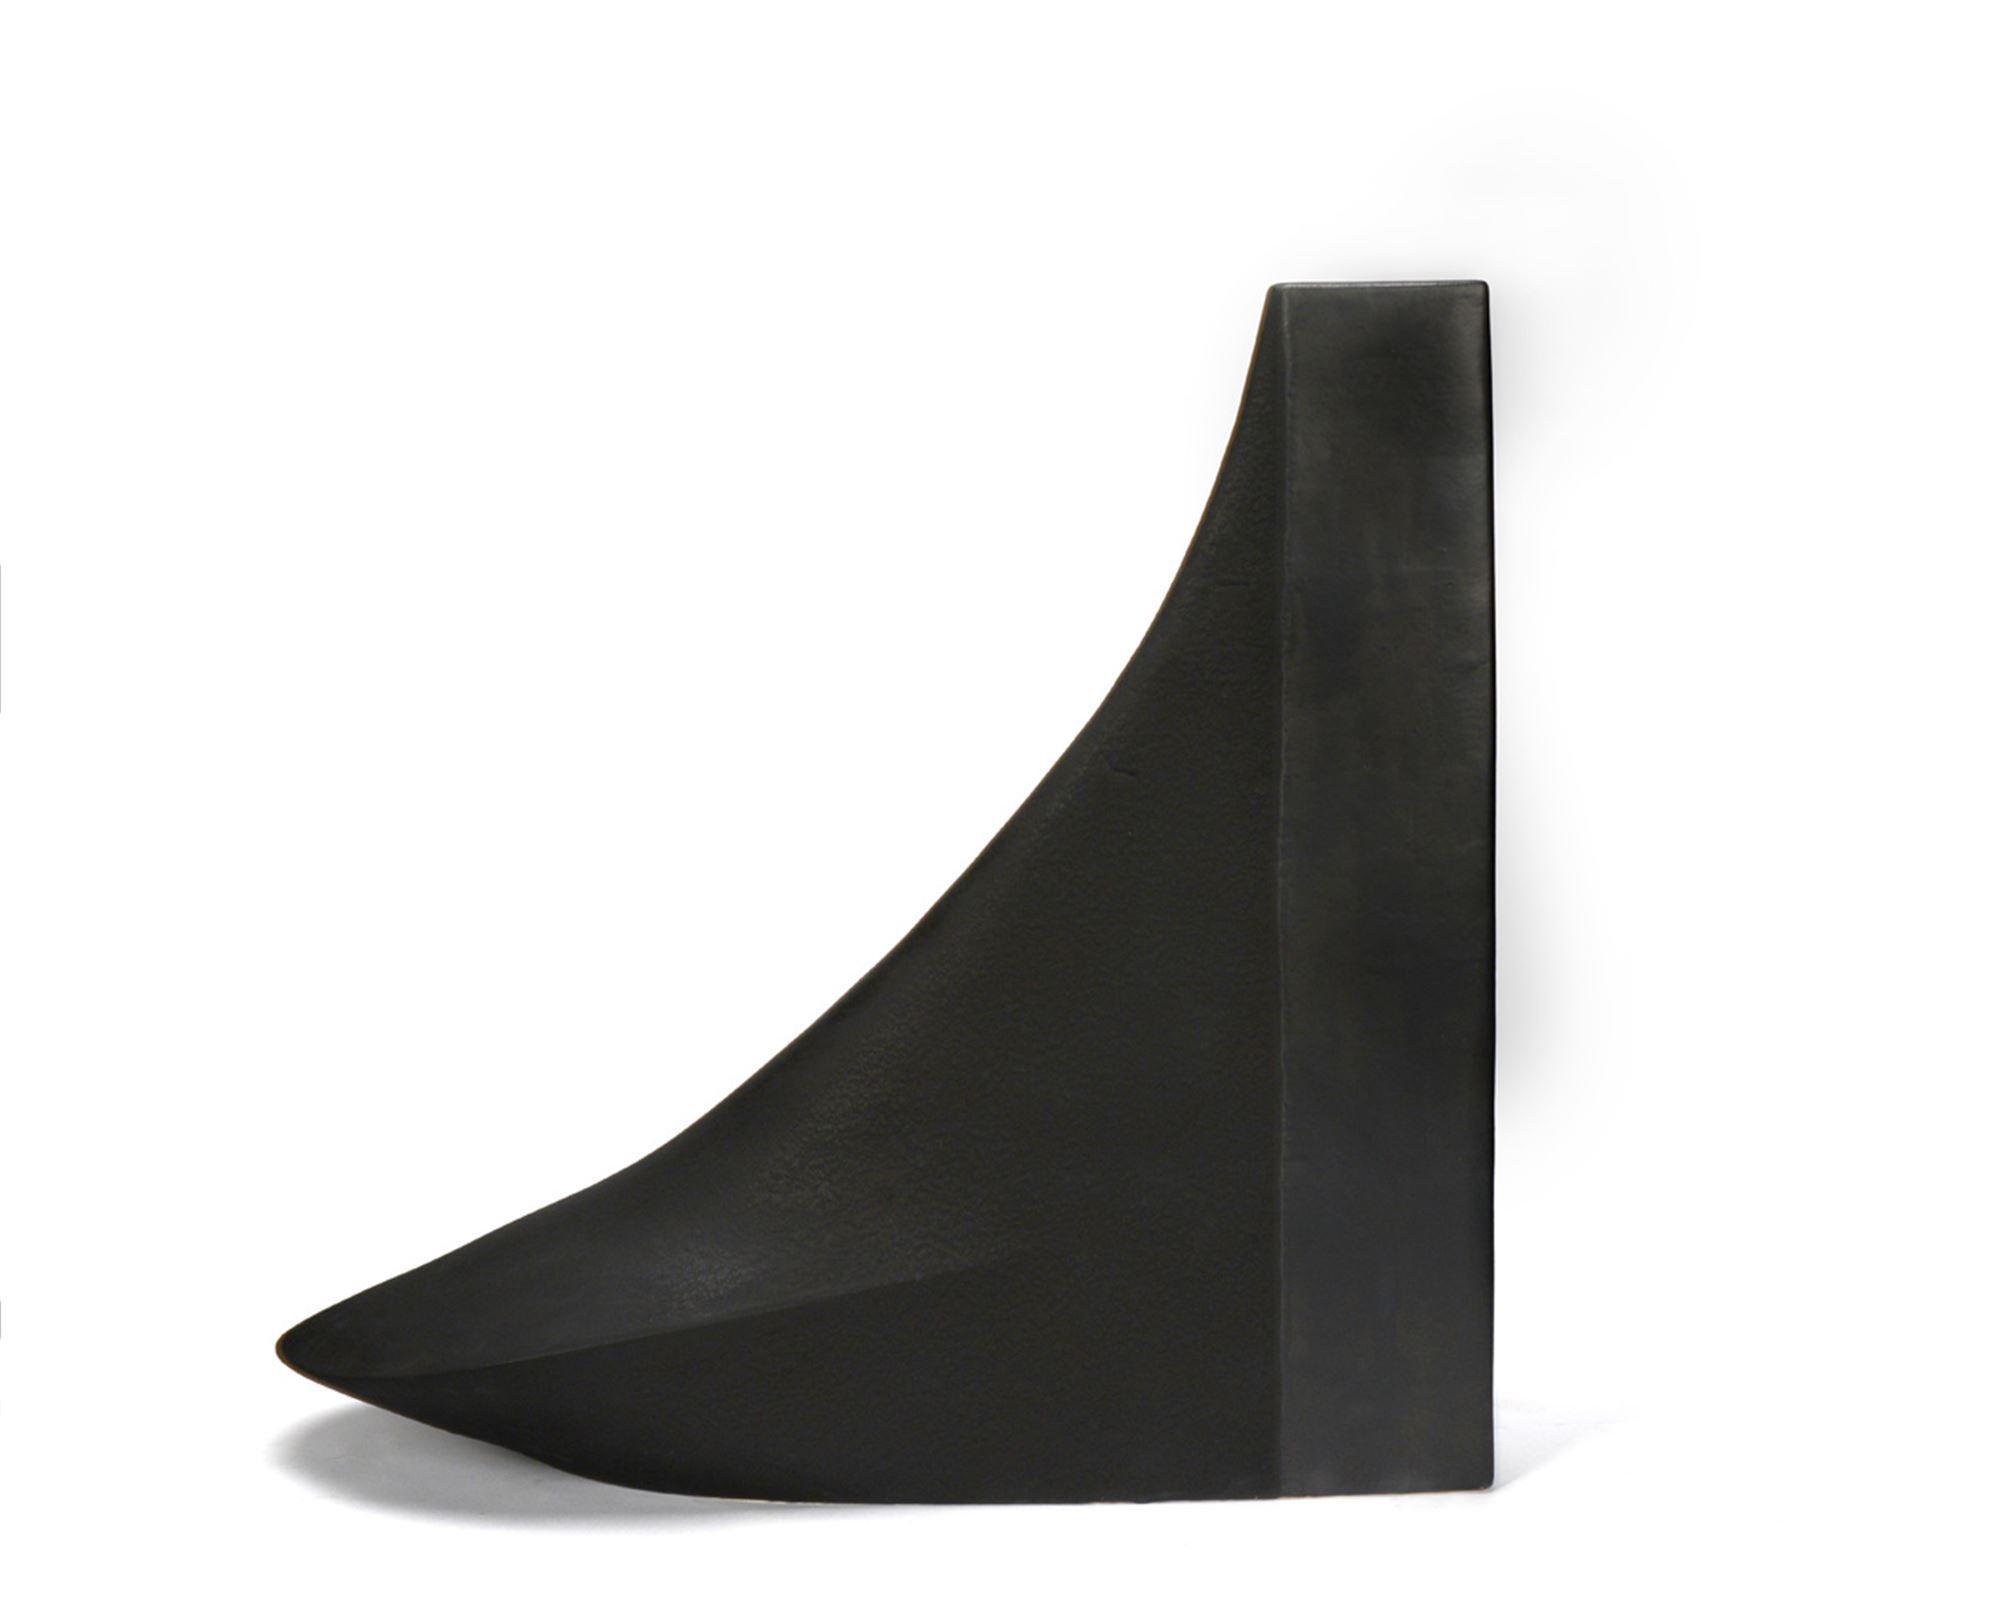 
							

									James Marshall									Untitled Black #505 									ceramic<br />
32 x 34 x 11 inches									


							